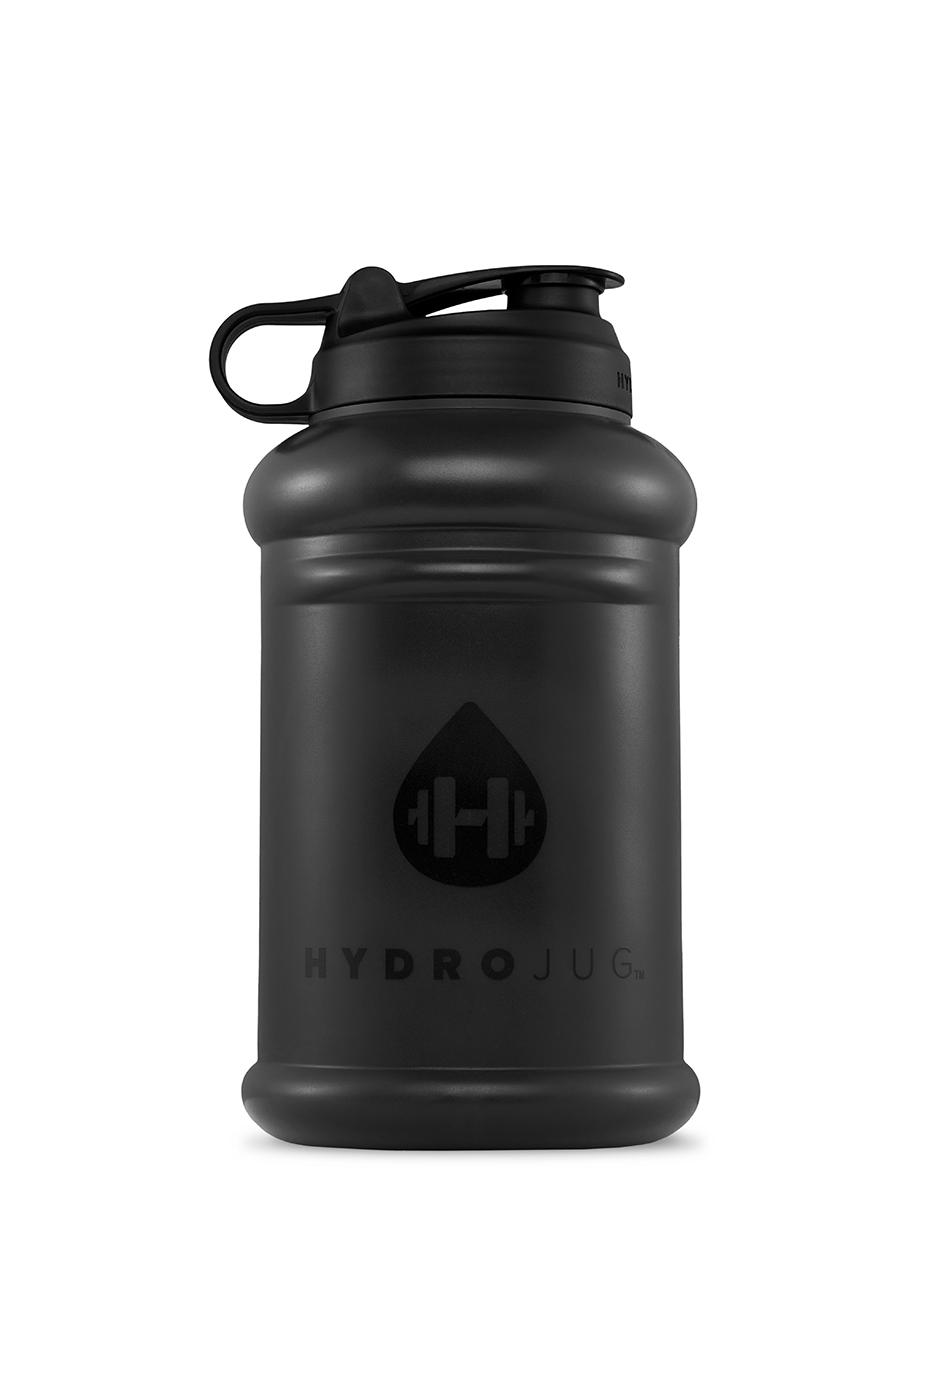 HydroJug Kitchen Drinkware